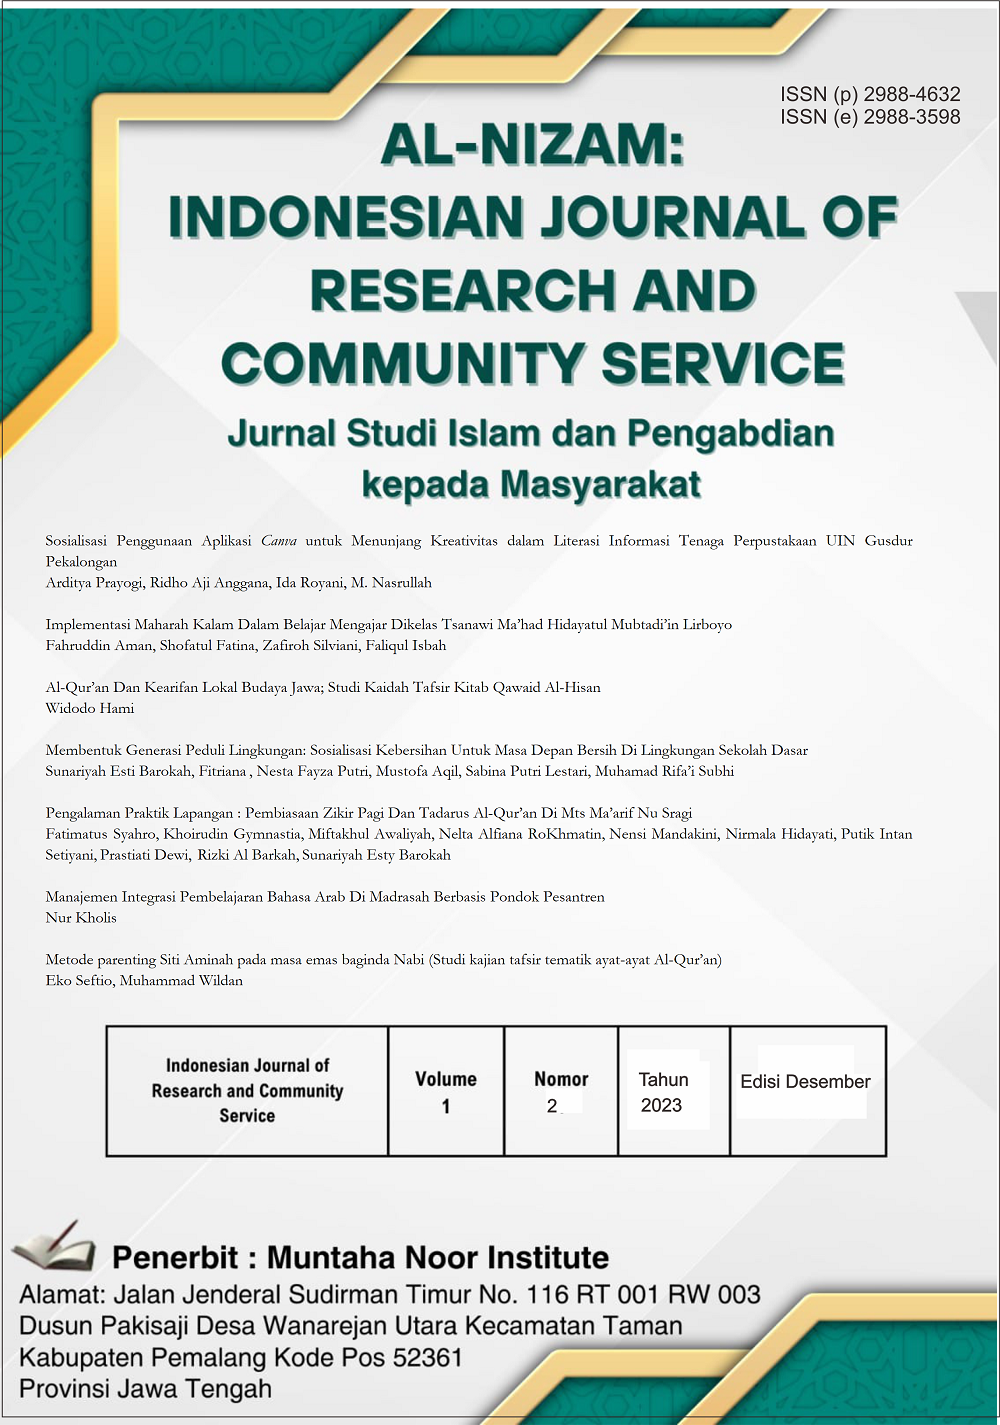 					Lihat Vol 1 No 2 (2023): Al-Nizam: Indonesian Journal of Research and Community Service
				